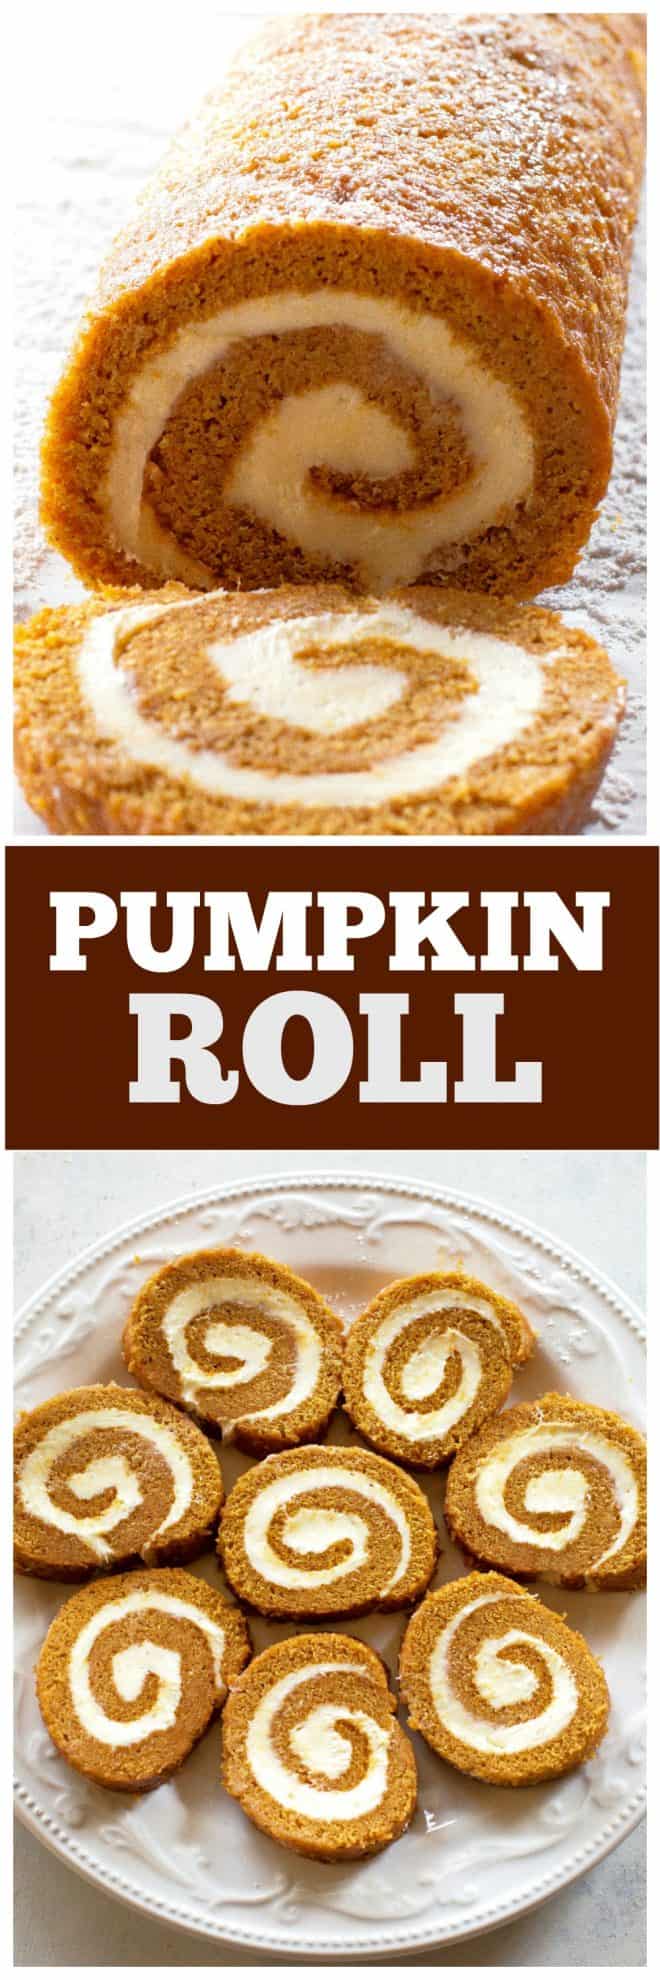 pumpkin roll recipe - Pumpkin Roll